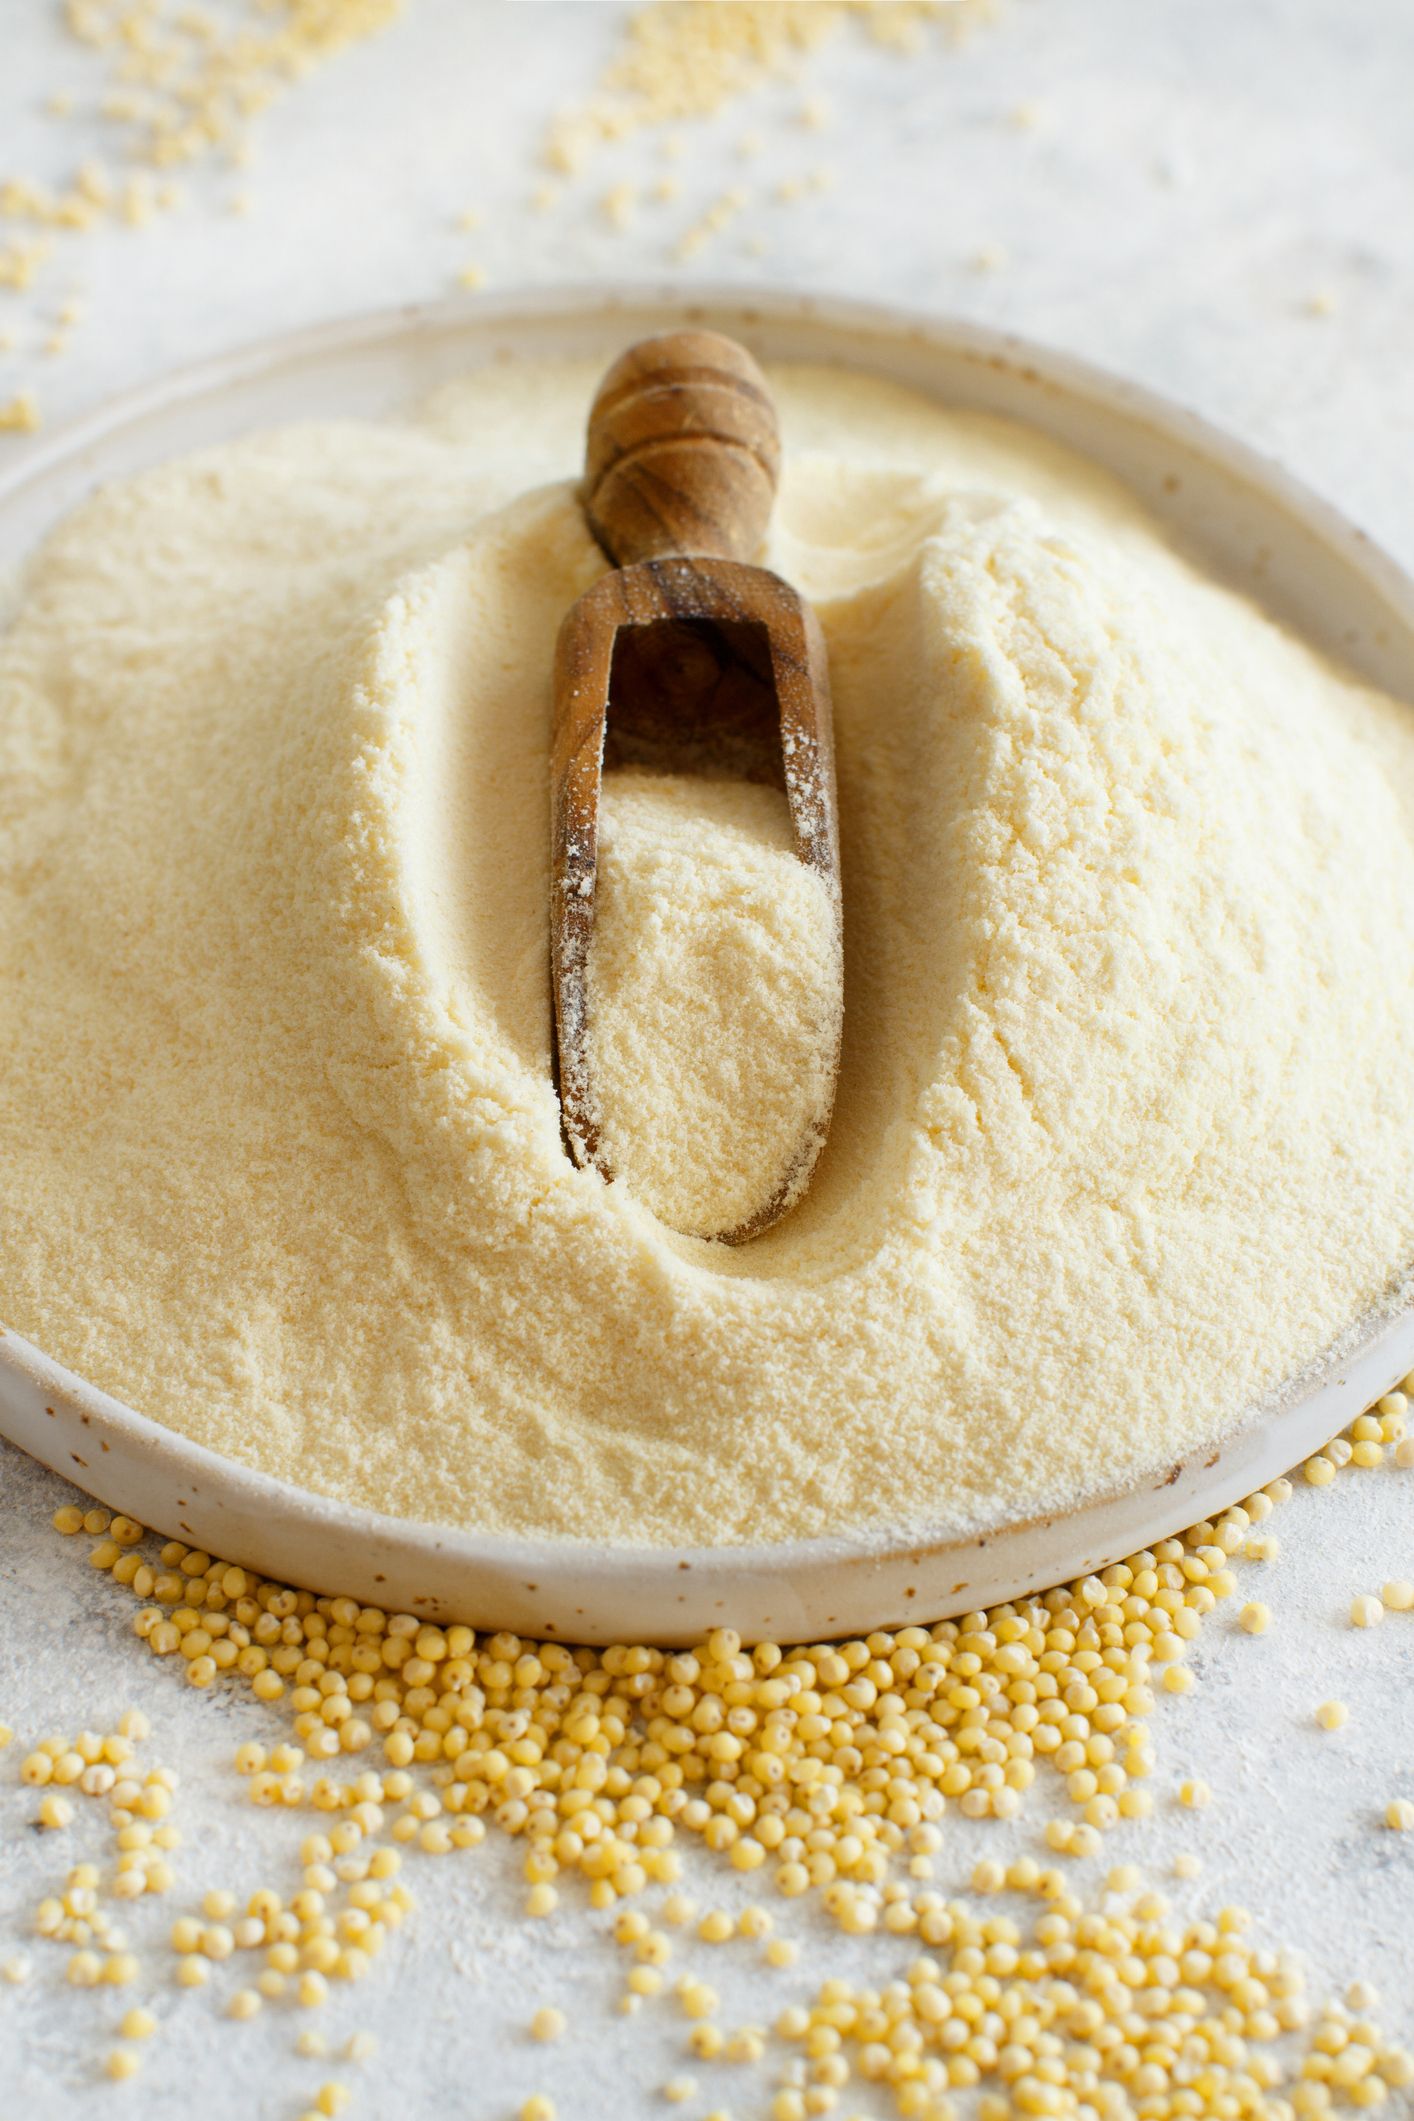 7 Substitutes for All-Purpose Flour - Escoffier